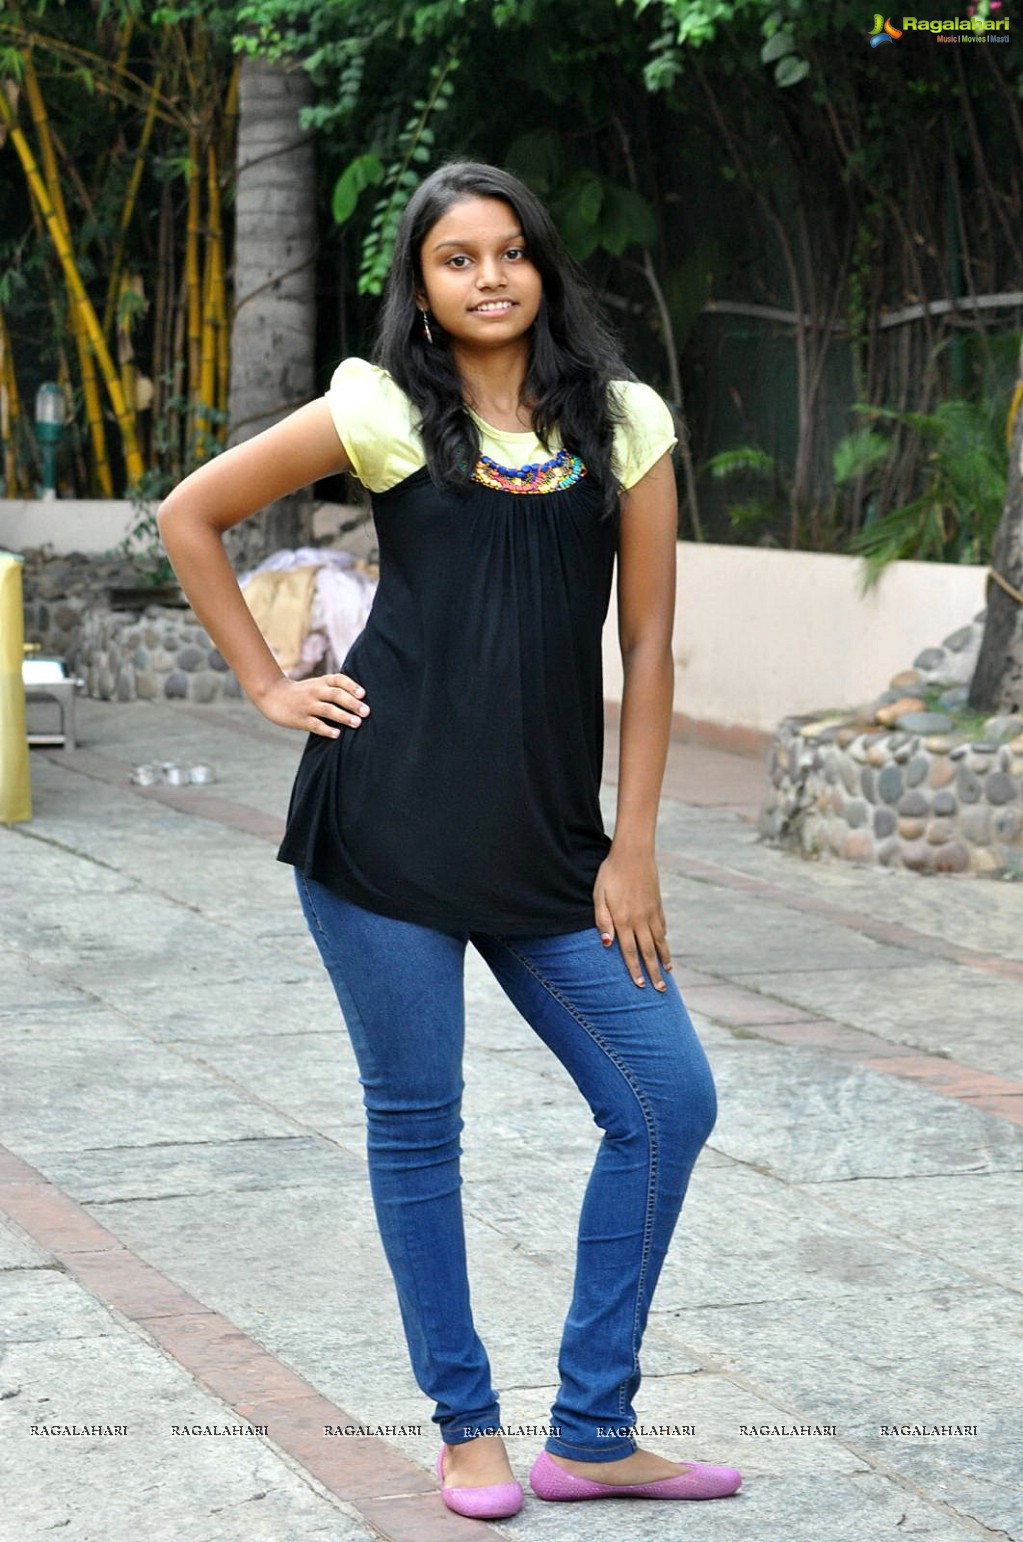 Indian princess 2012 auditions